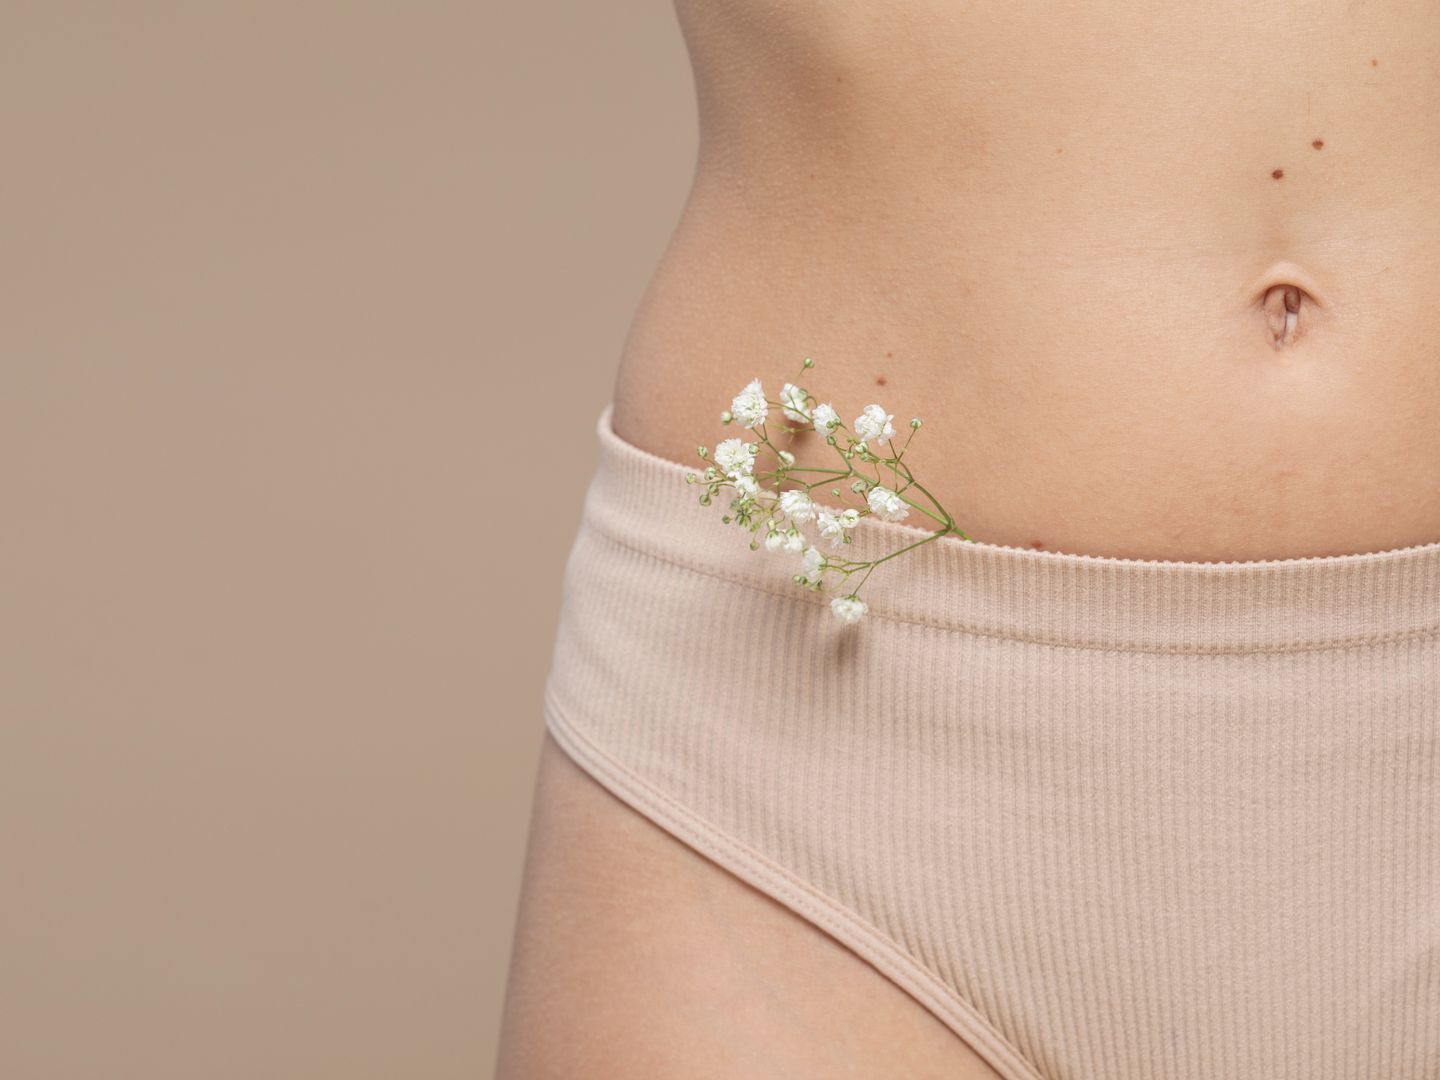 woman in underwear with a flower